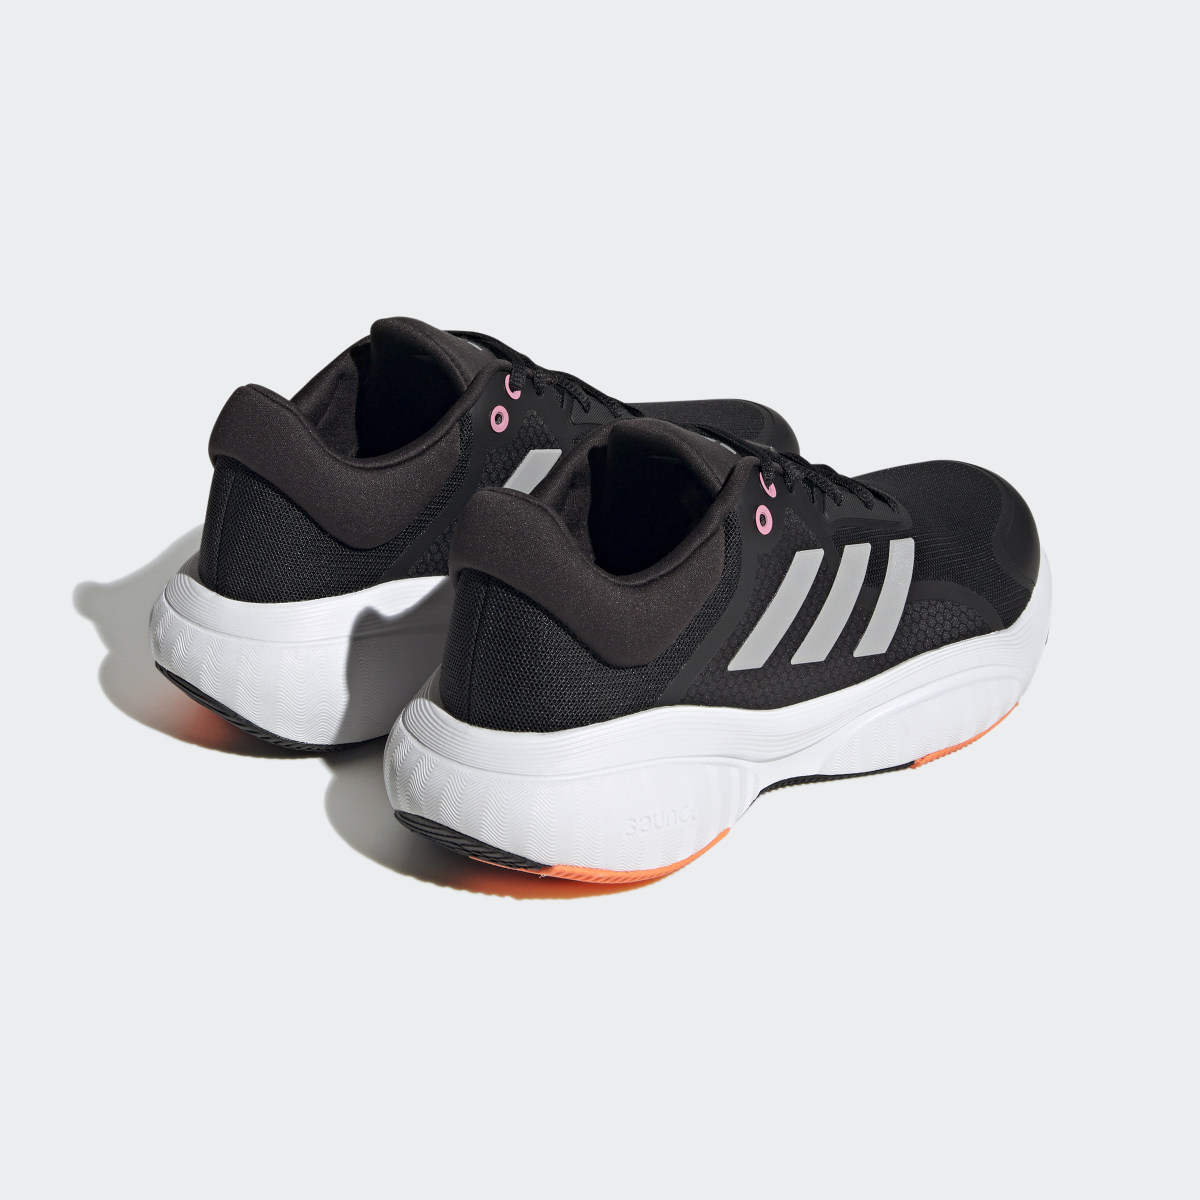 Adidas Response Ayakkabı. 6